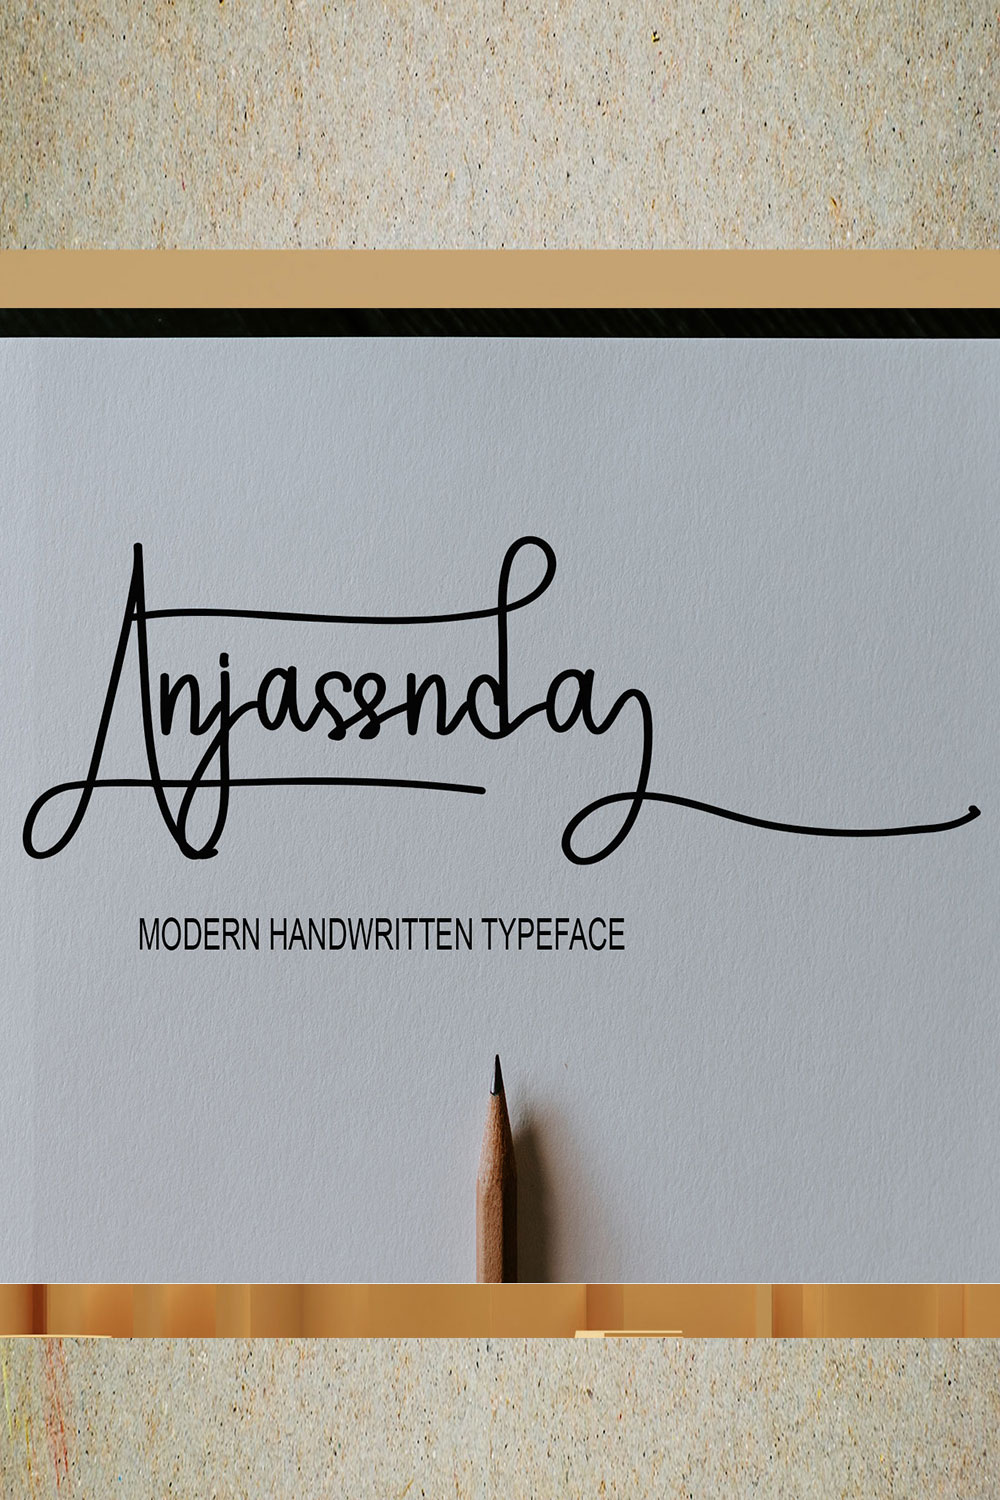 Anjassnda Script Signature Font Pinterest image.